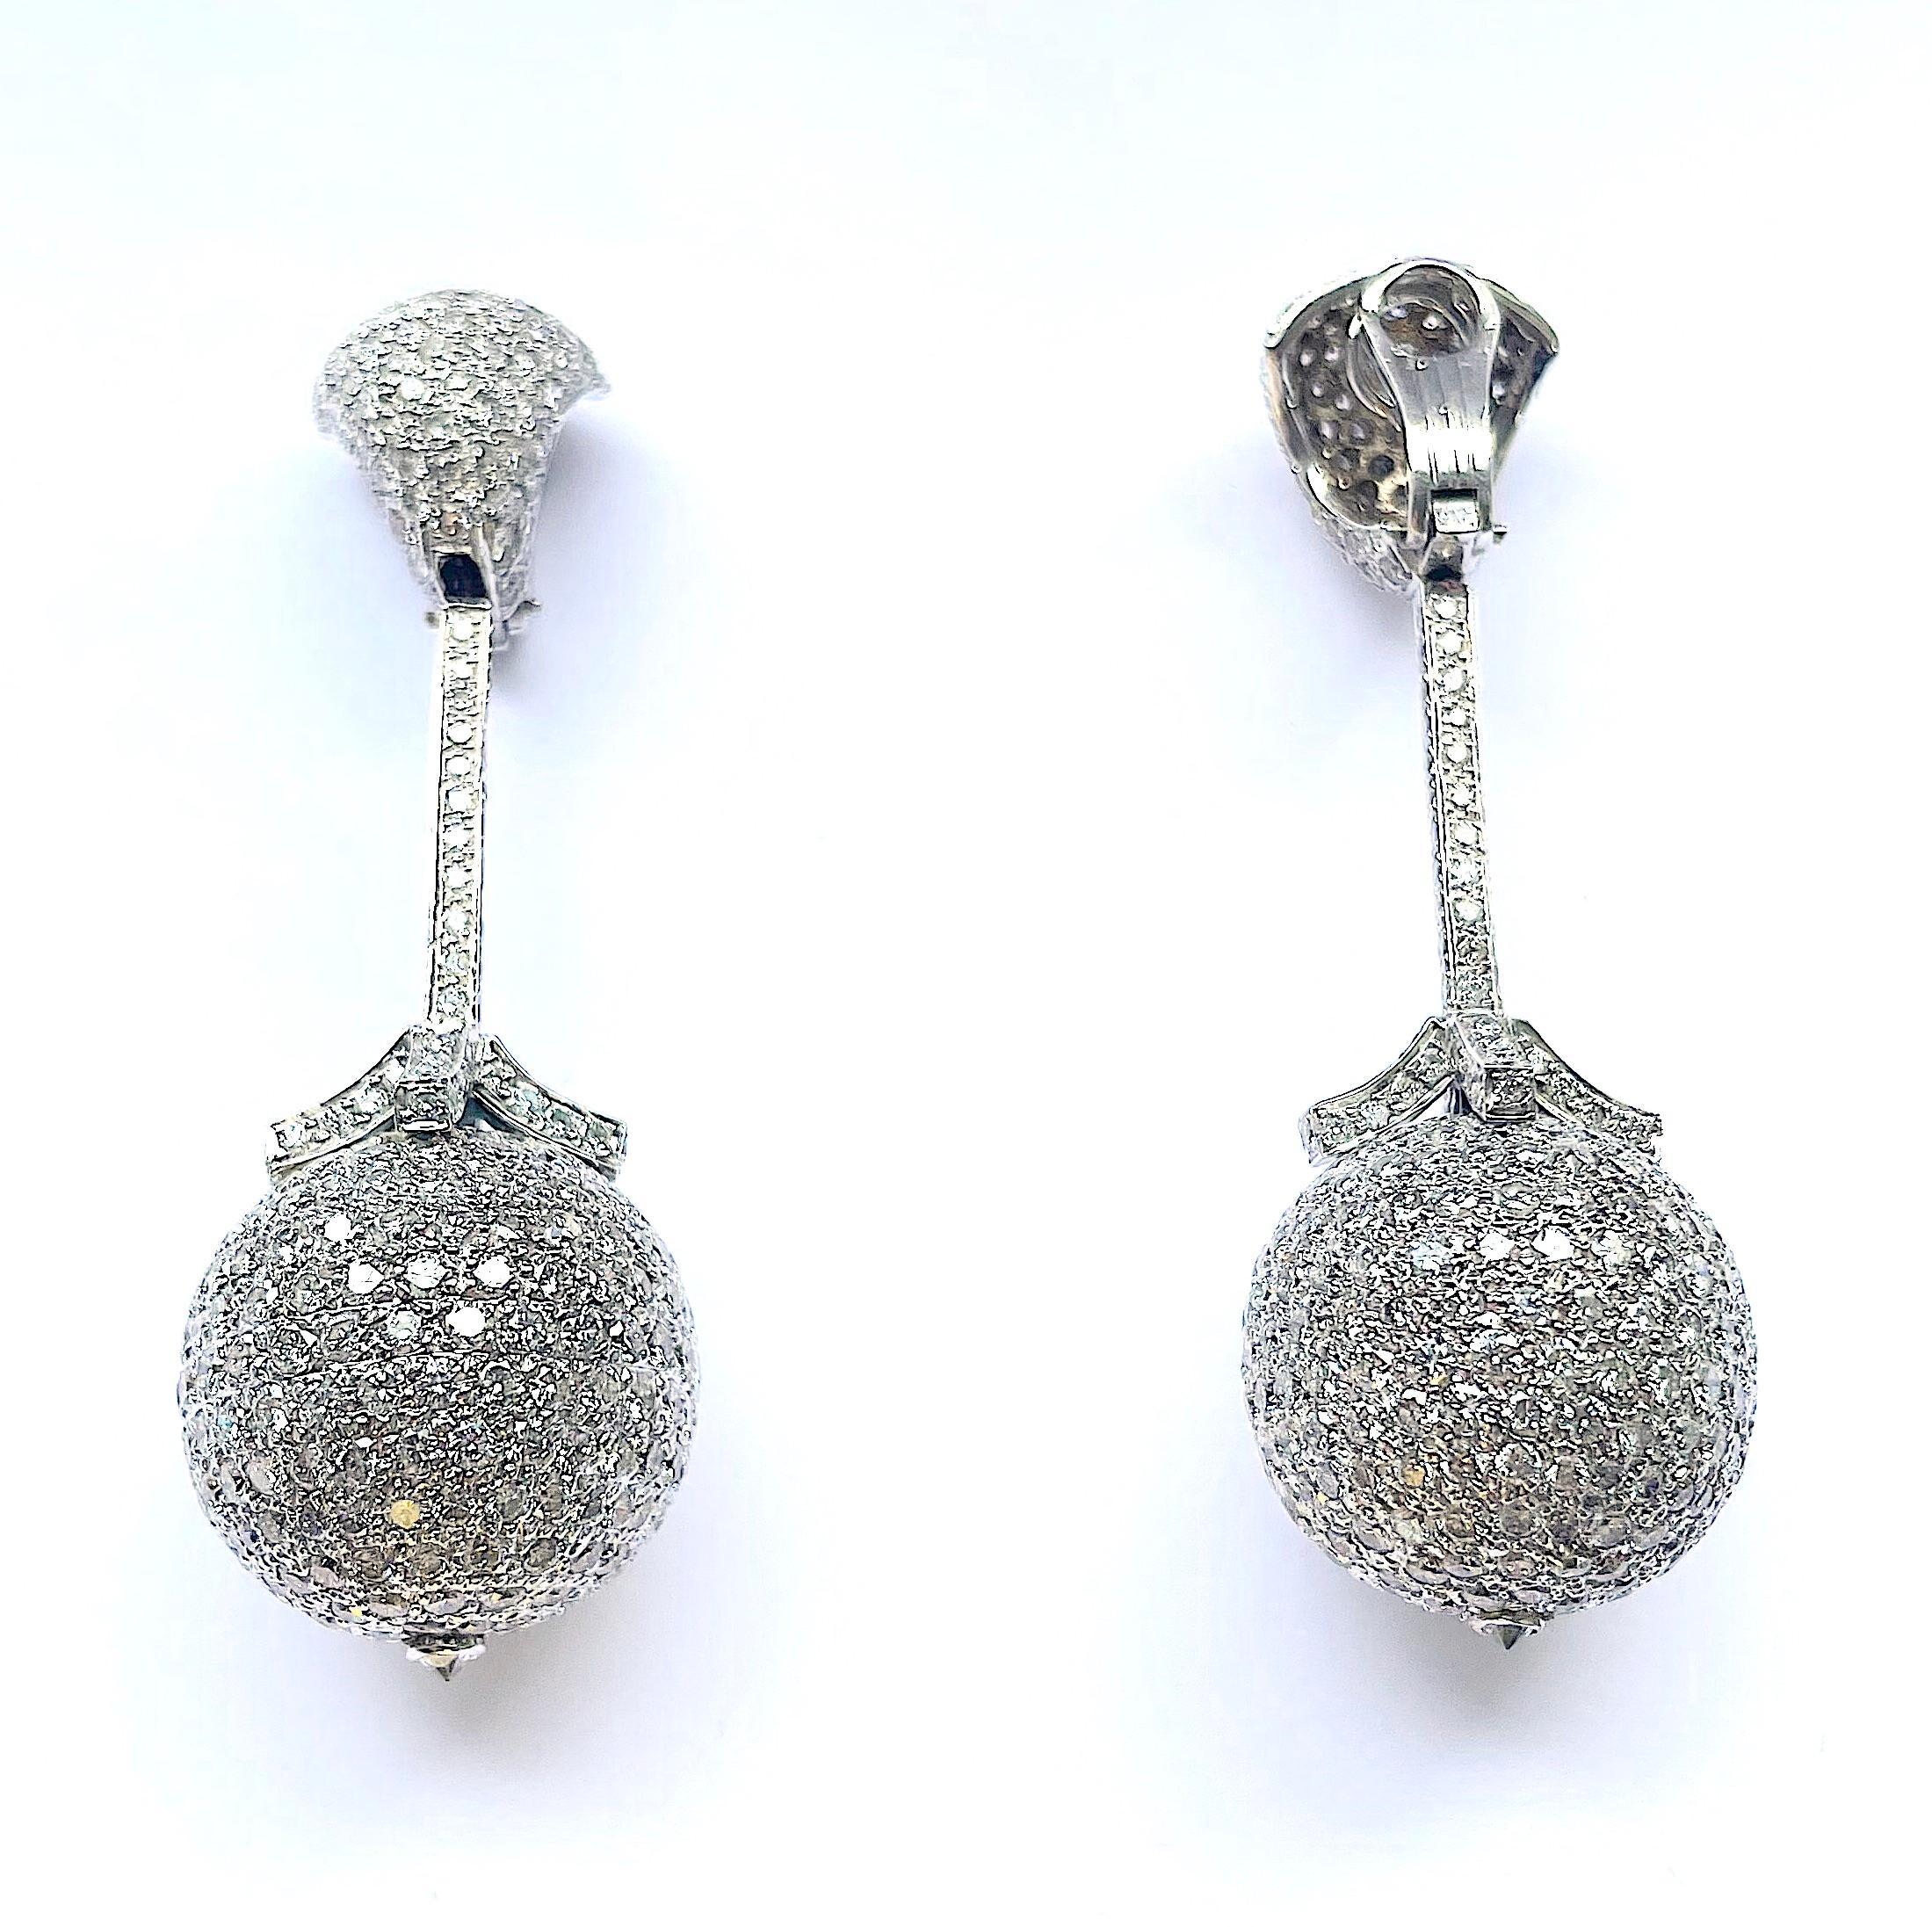 Brilliant Cut Large Diamond Drop Earrings with Diamond Ball For Sale